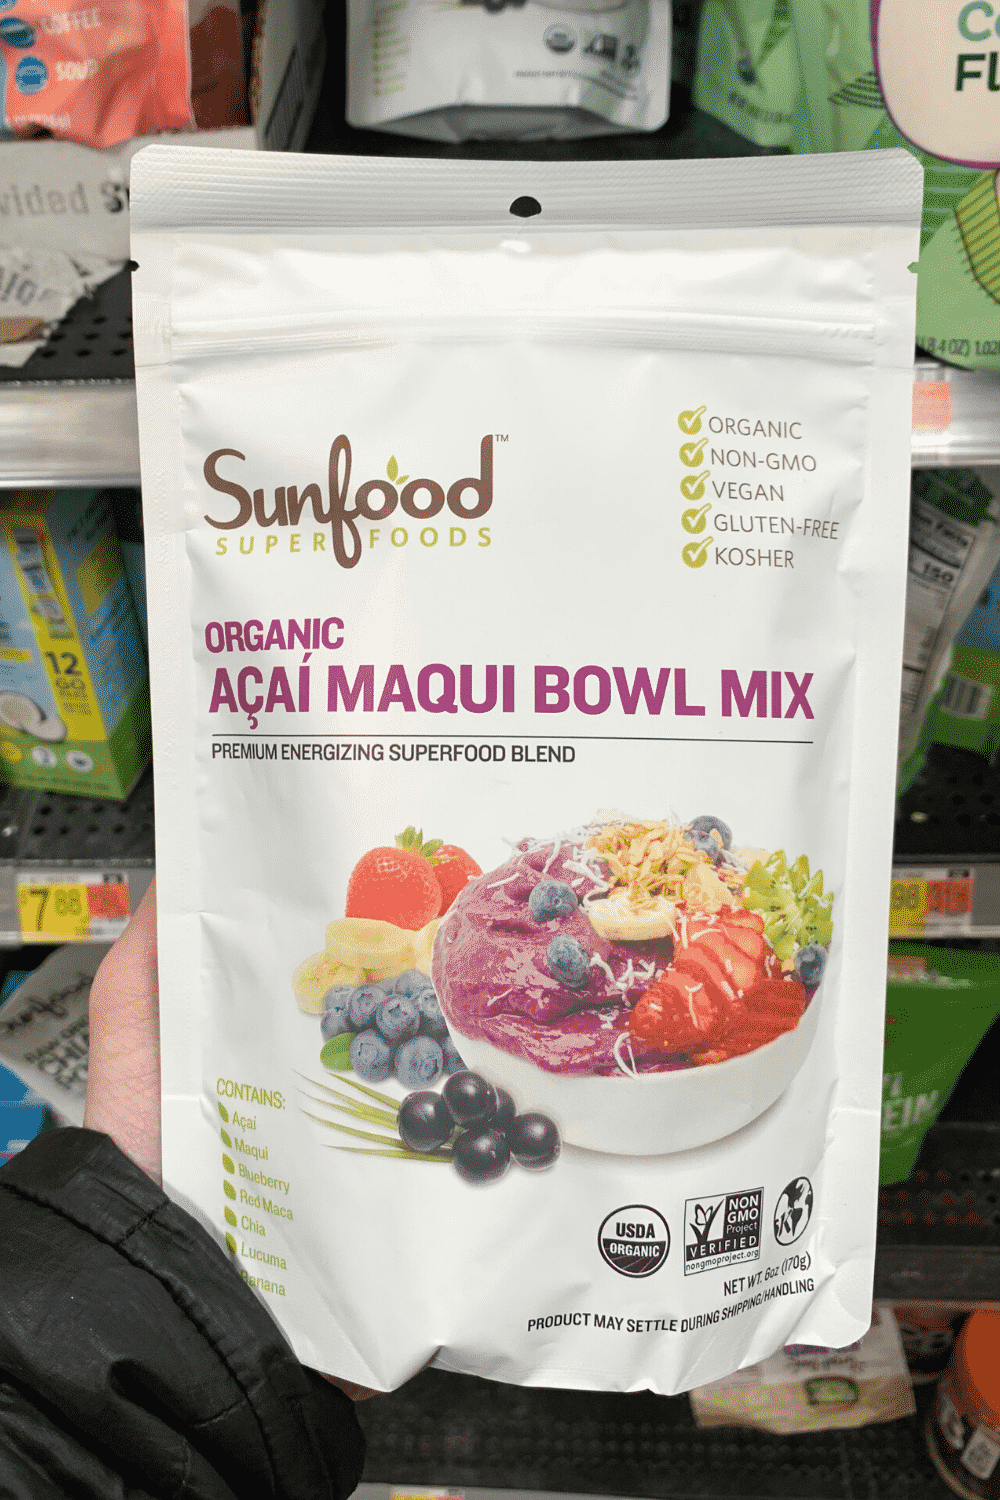 A hand holding sun food super foods organic acai maqui bowl mix.